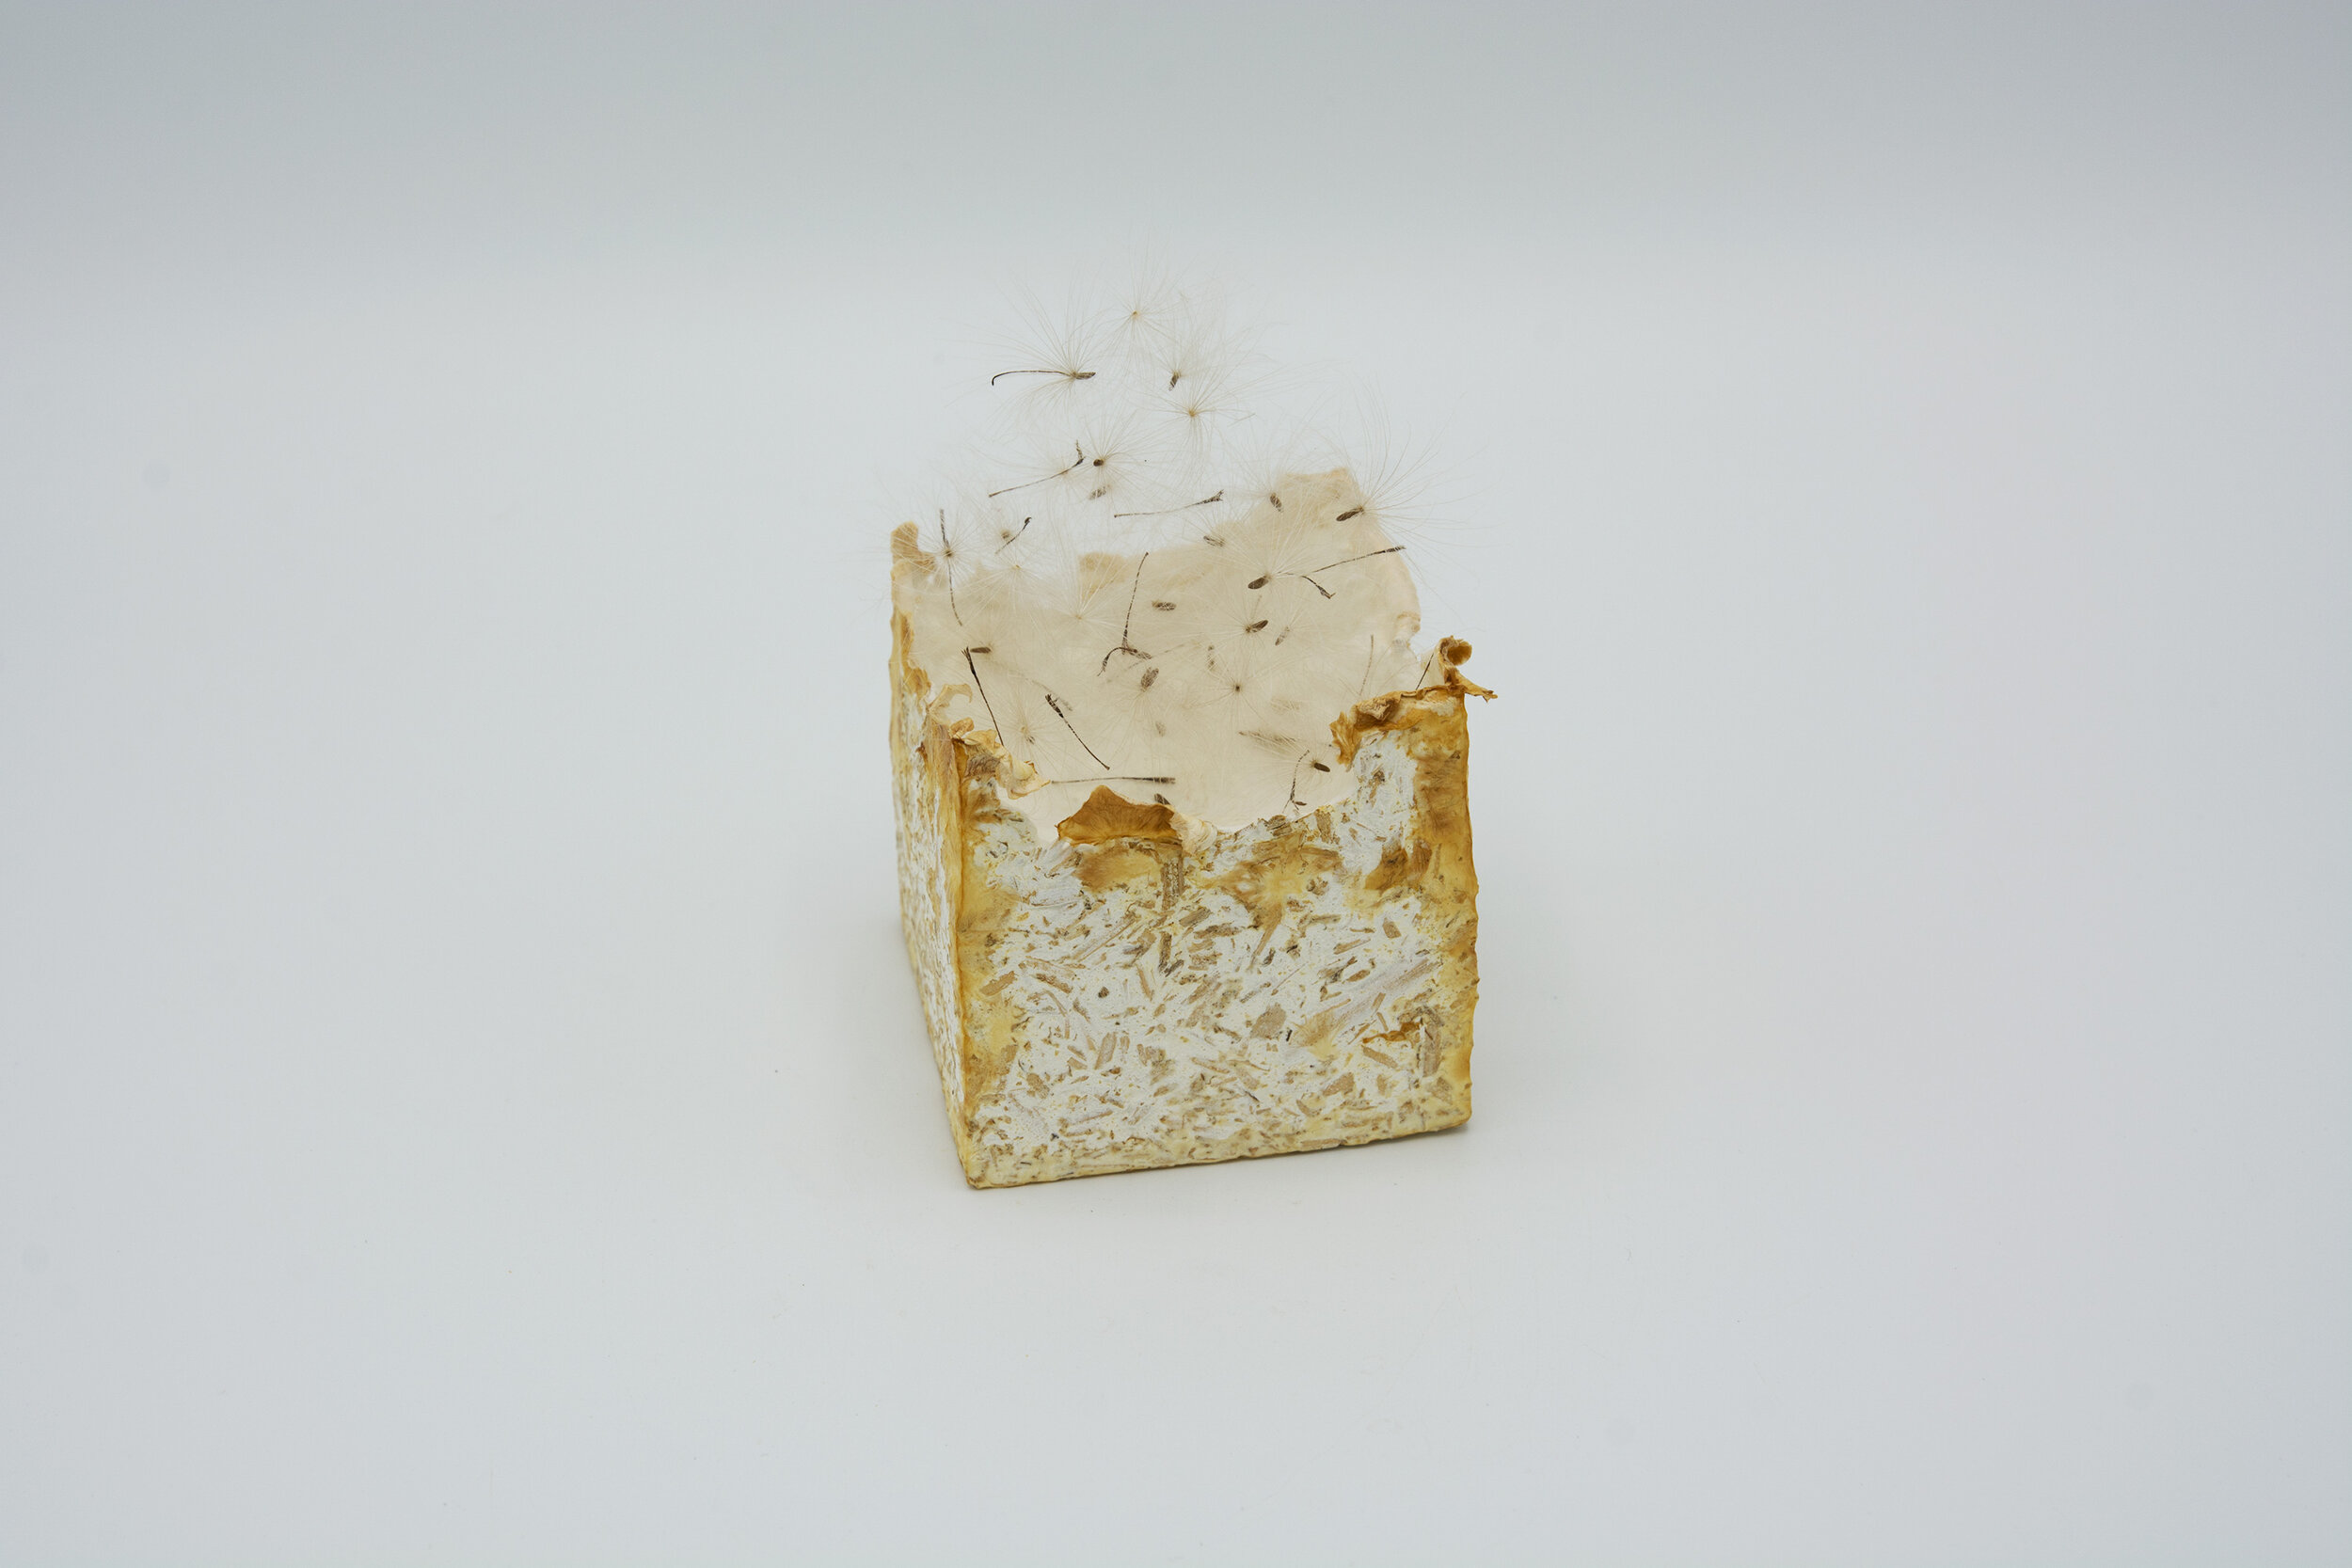  Kelly M O'Brien, One Meter Quadrat, detail, medium cube. Mycelium, thistle seed heads ©2021 